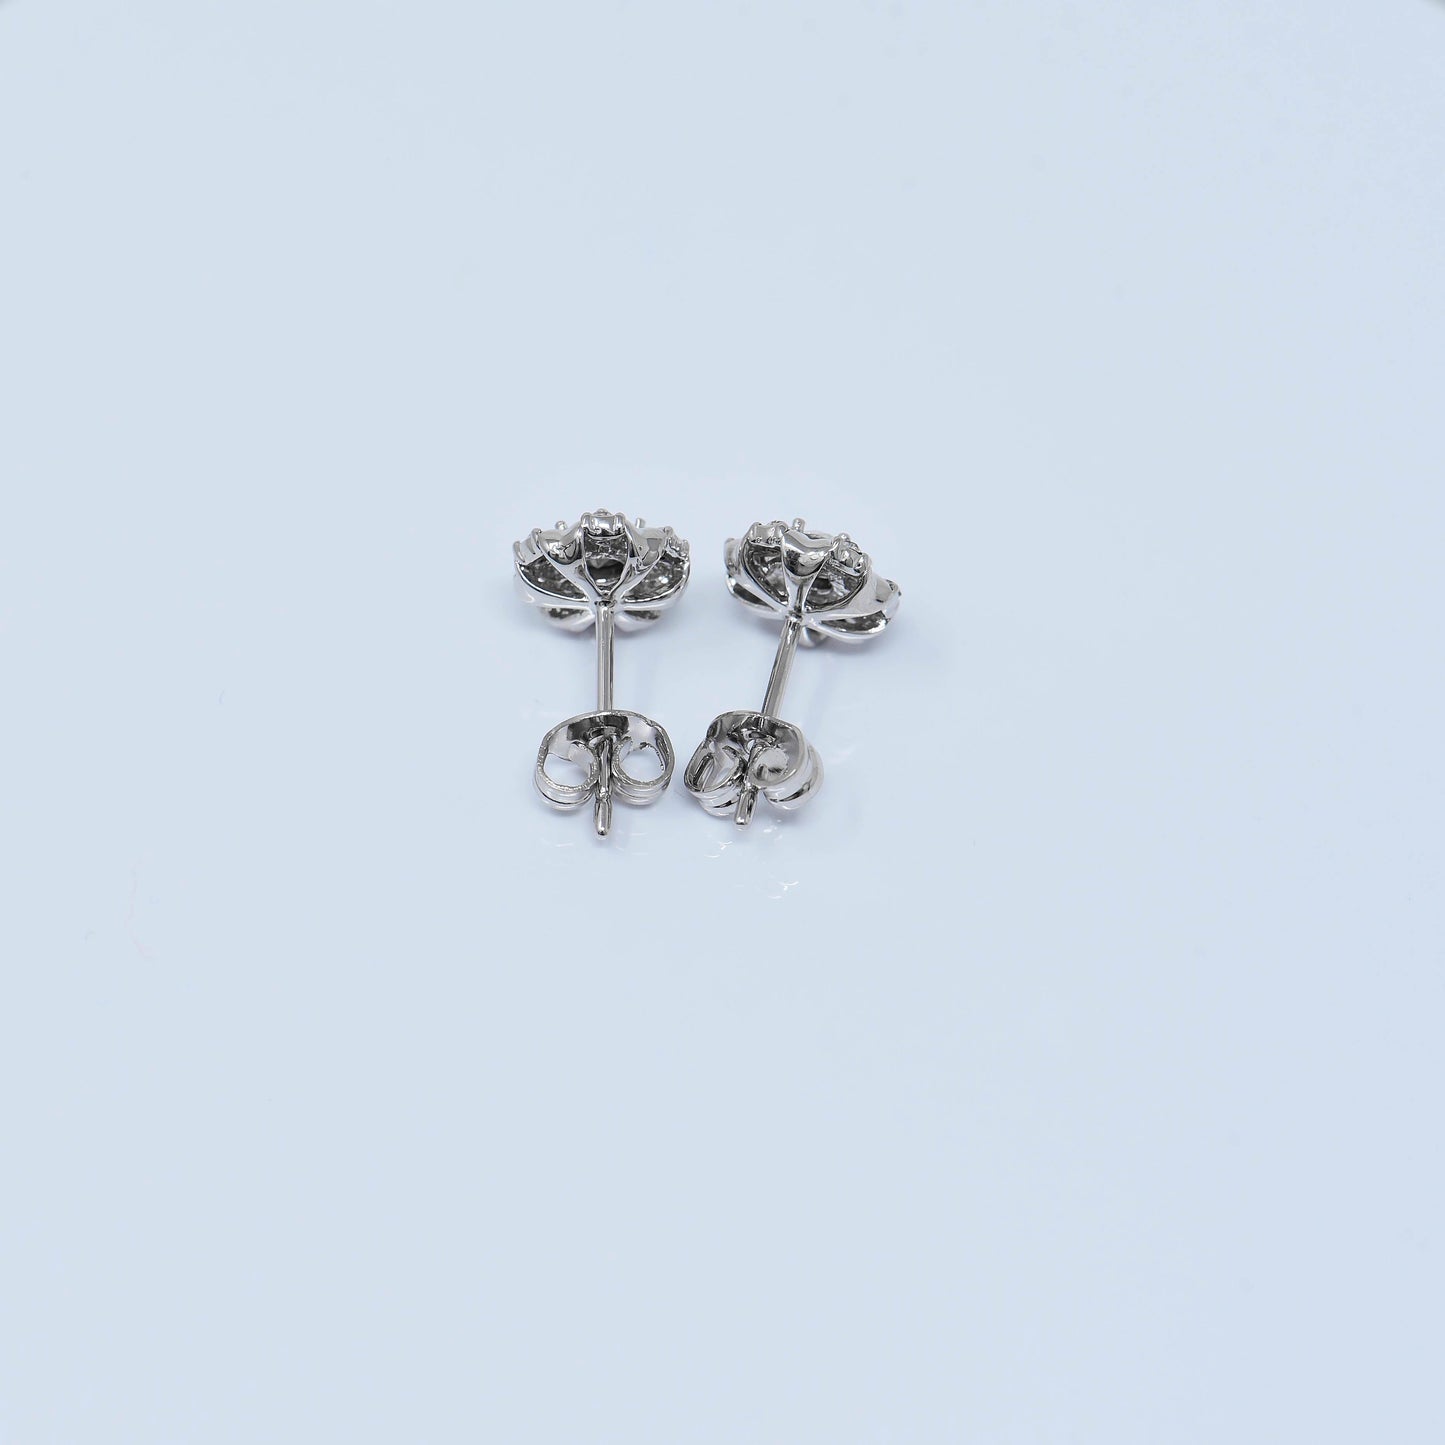 "Present" earrings